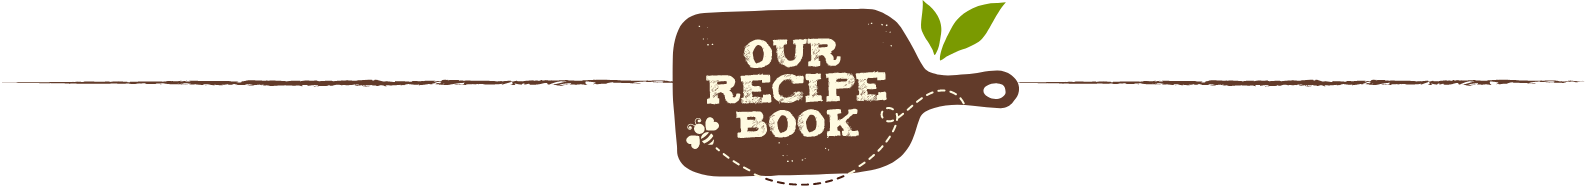 our recipe book